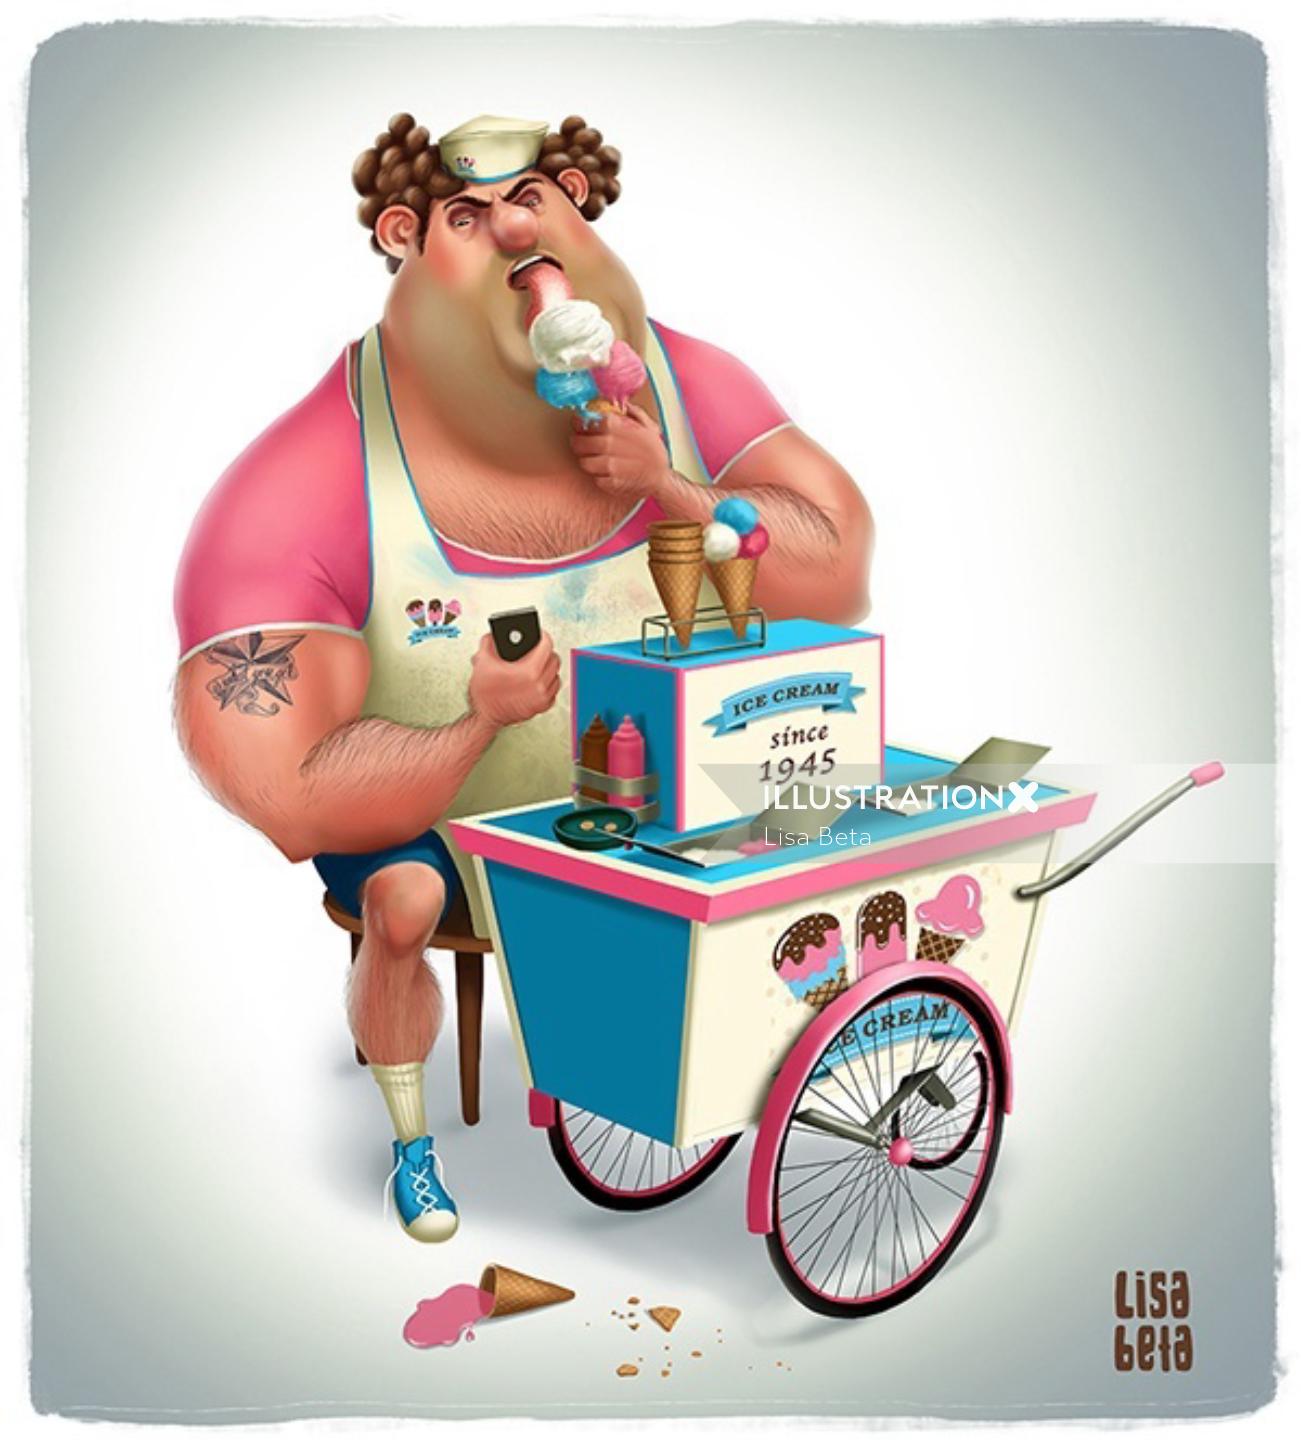 Huge man eating ice cream illustration by Lisa Beta